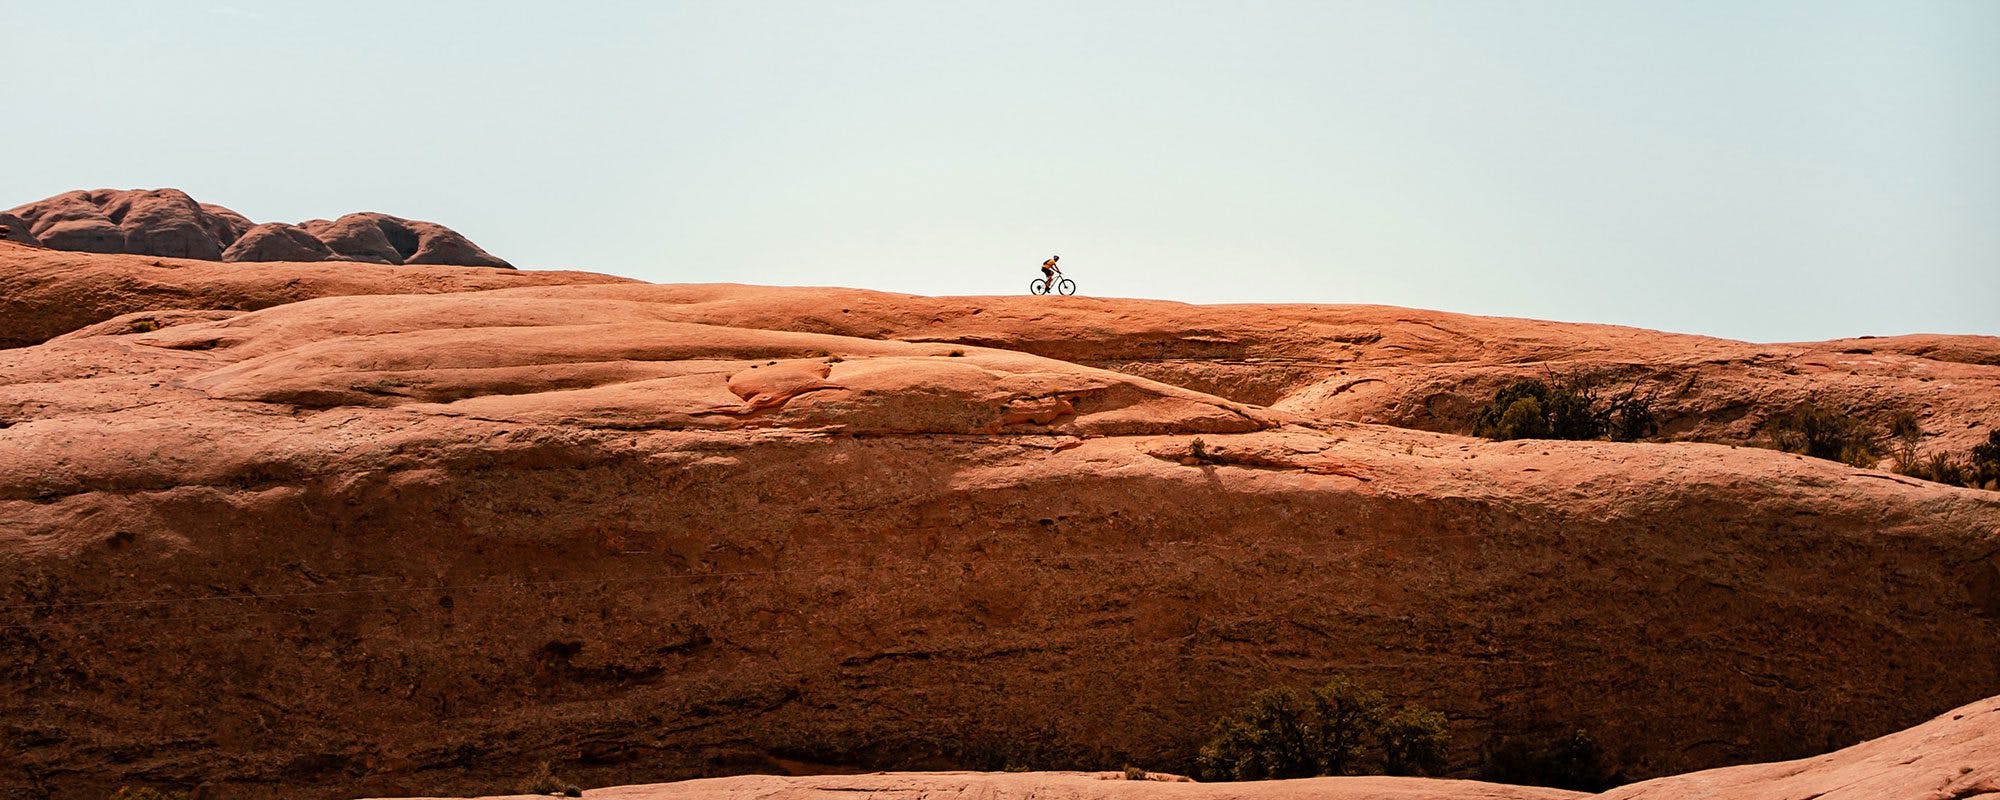 person riding a bicycle along a canyon